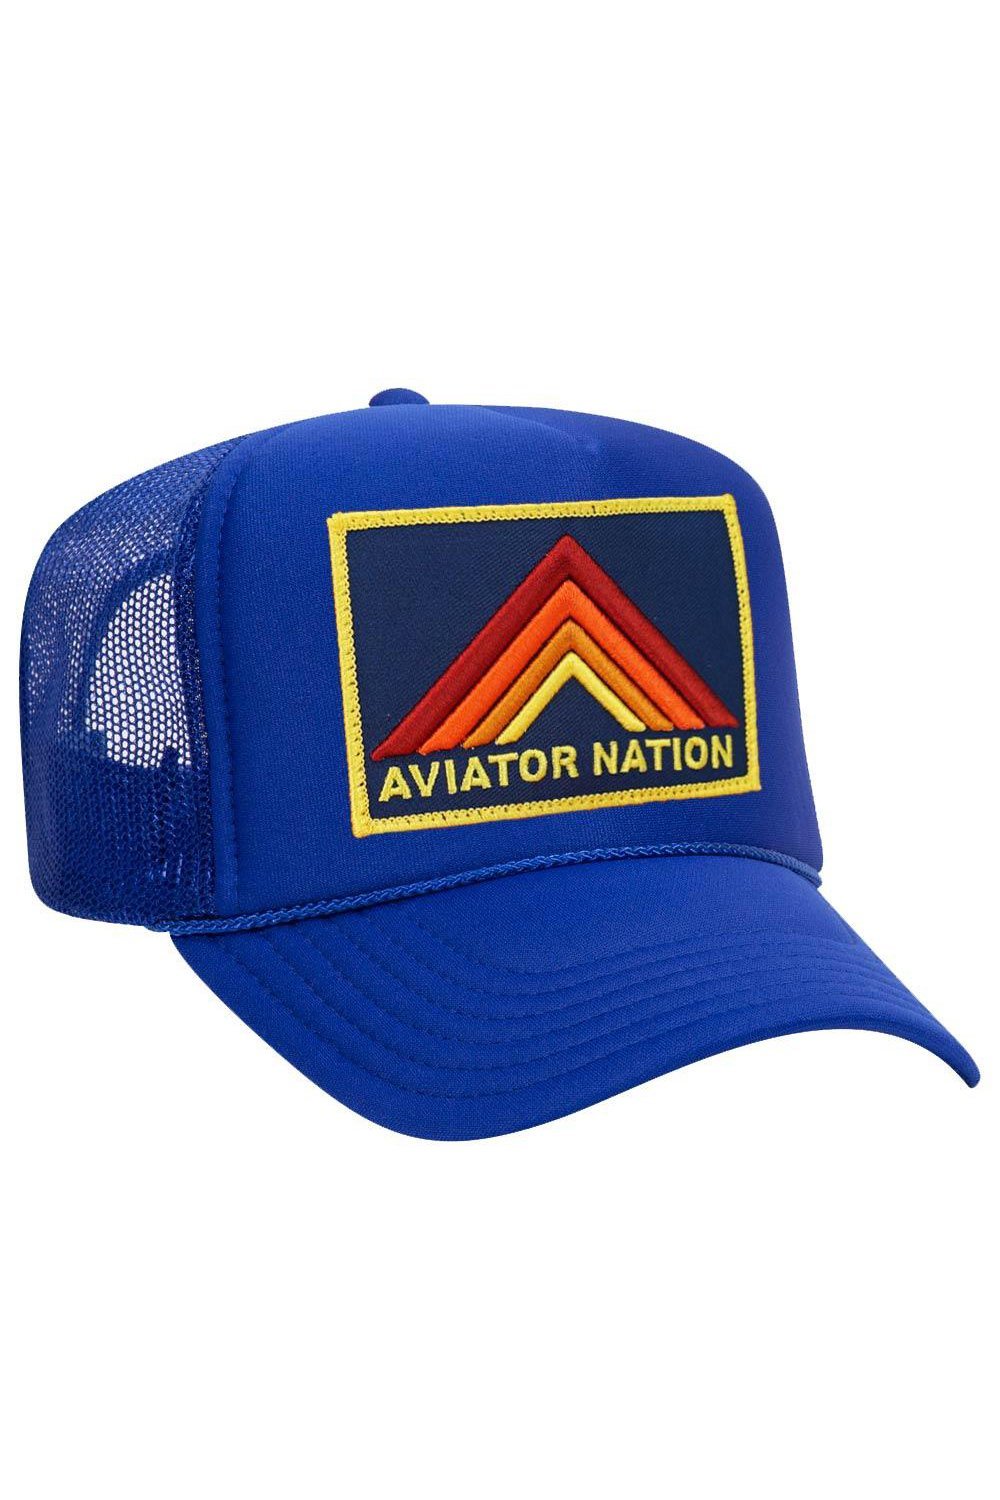 MOUNTAIN STRIPE VINTAGE TRUCKER HAT HATS Aviator Nation OS ROYAL 